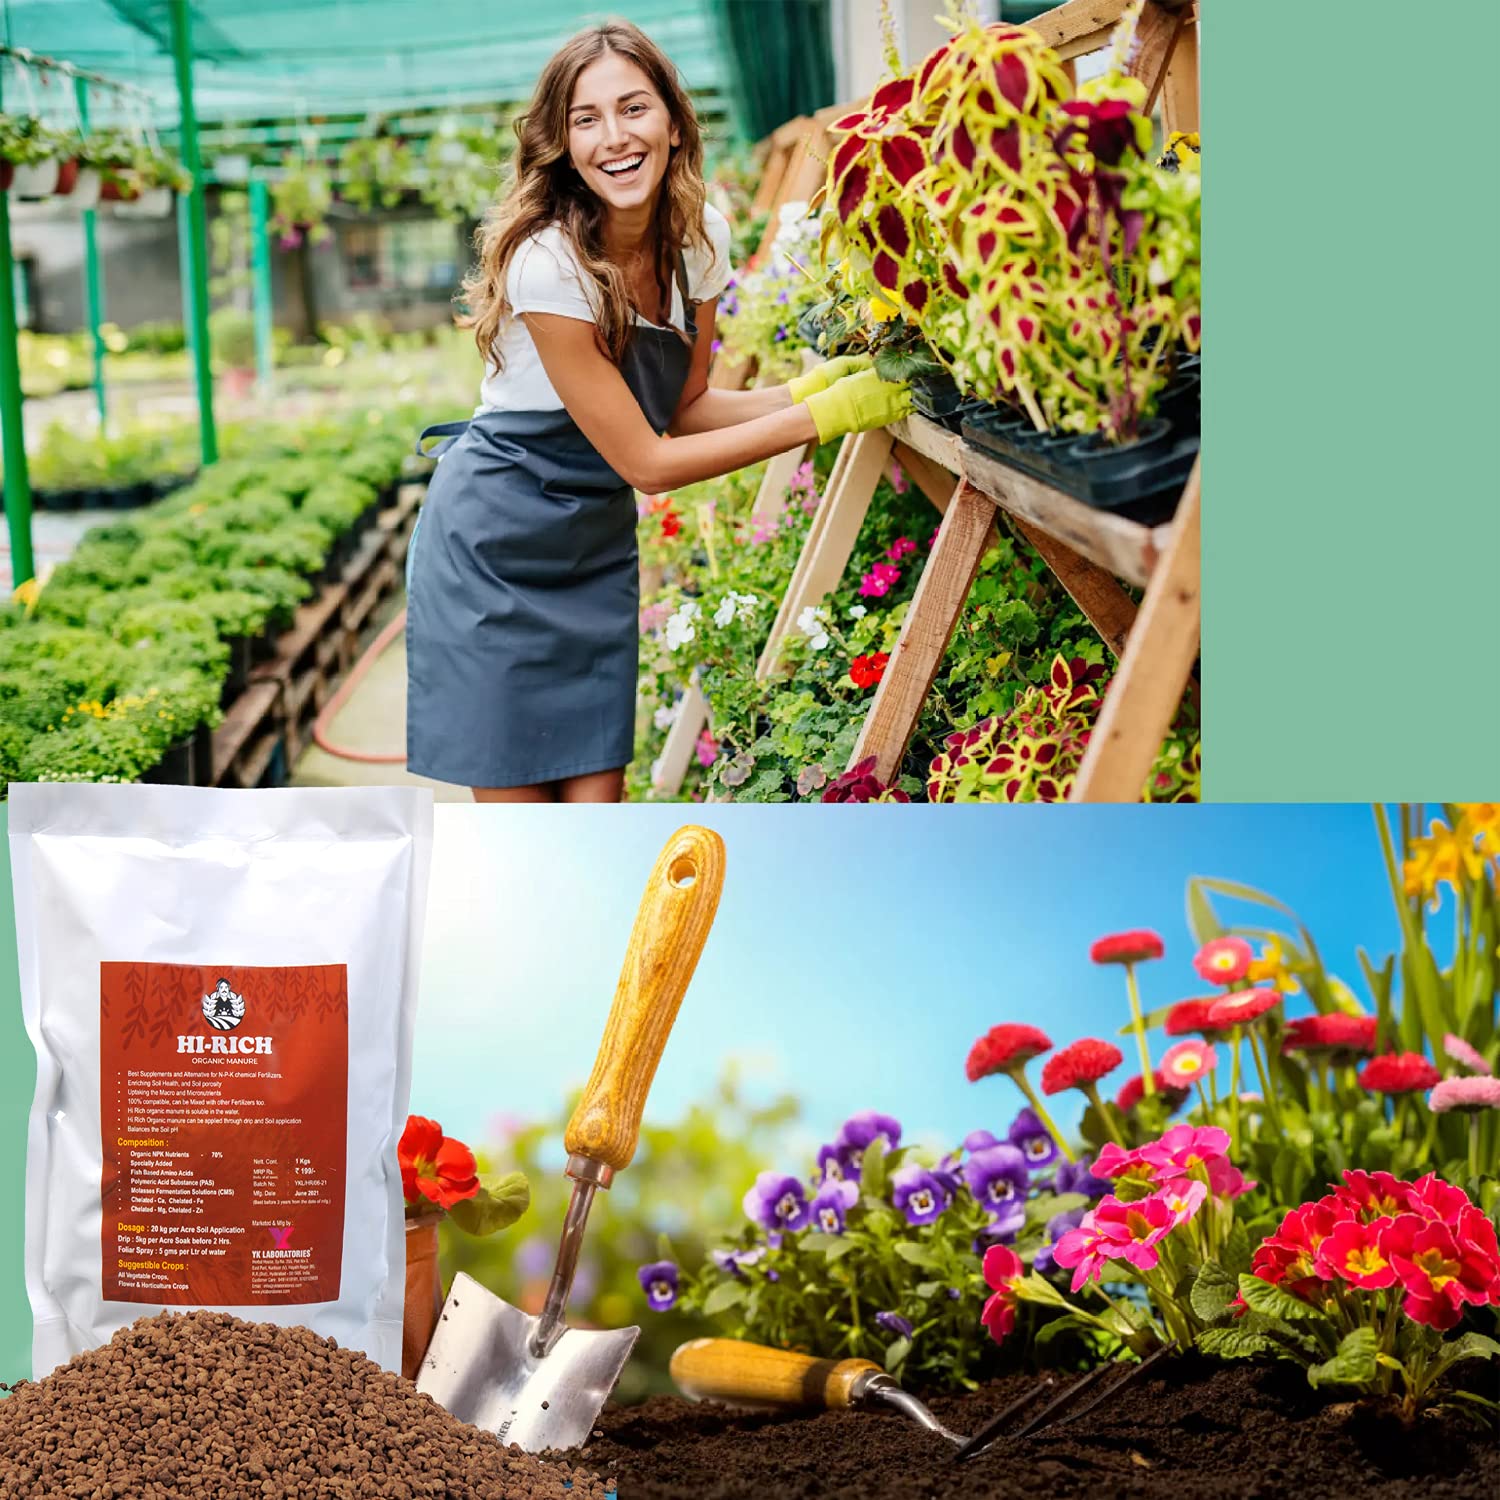 yk laboratories hi rich organic manure/fertilizer for gardening plants & flower pots 2kg